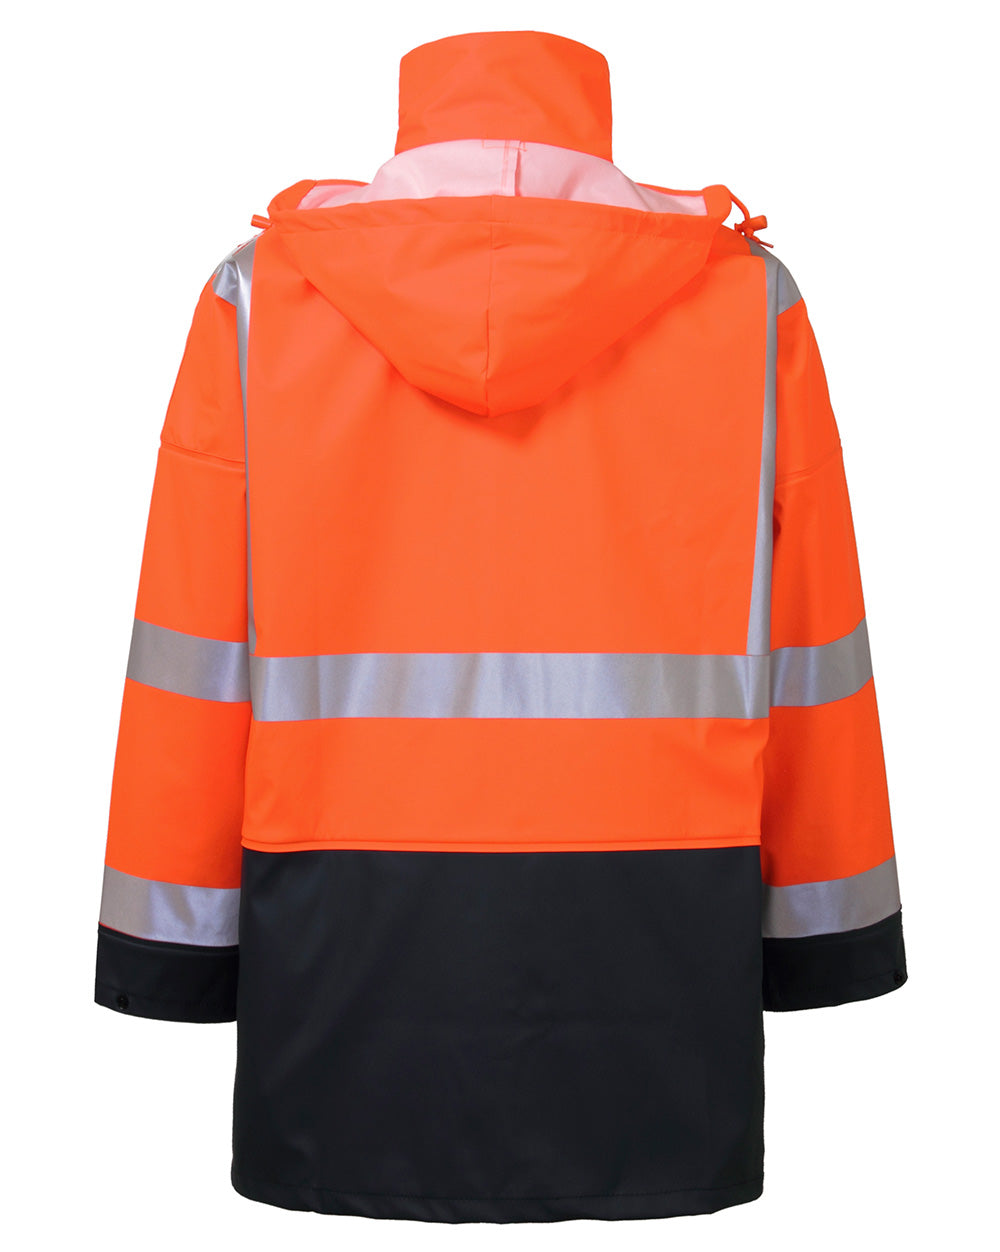 Shelter Jacket in Fluoro Orange & Navy